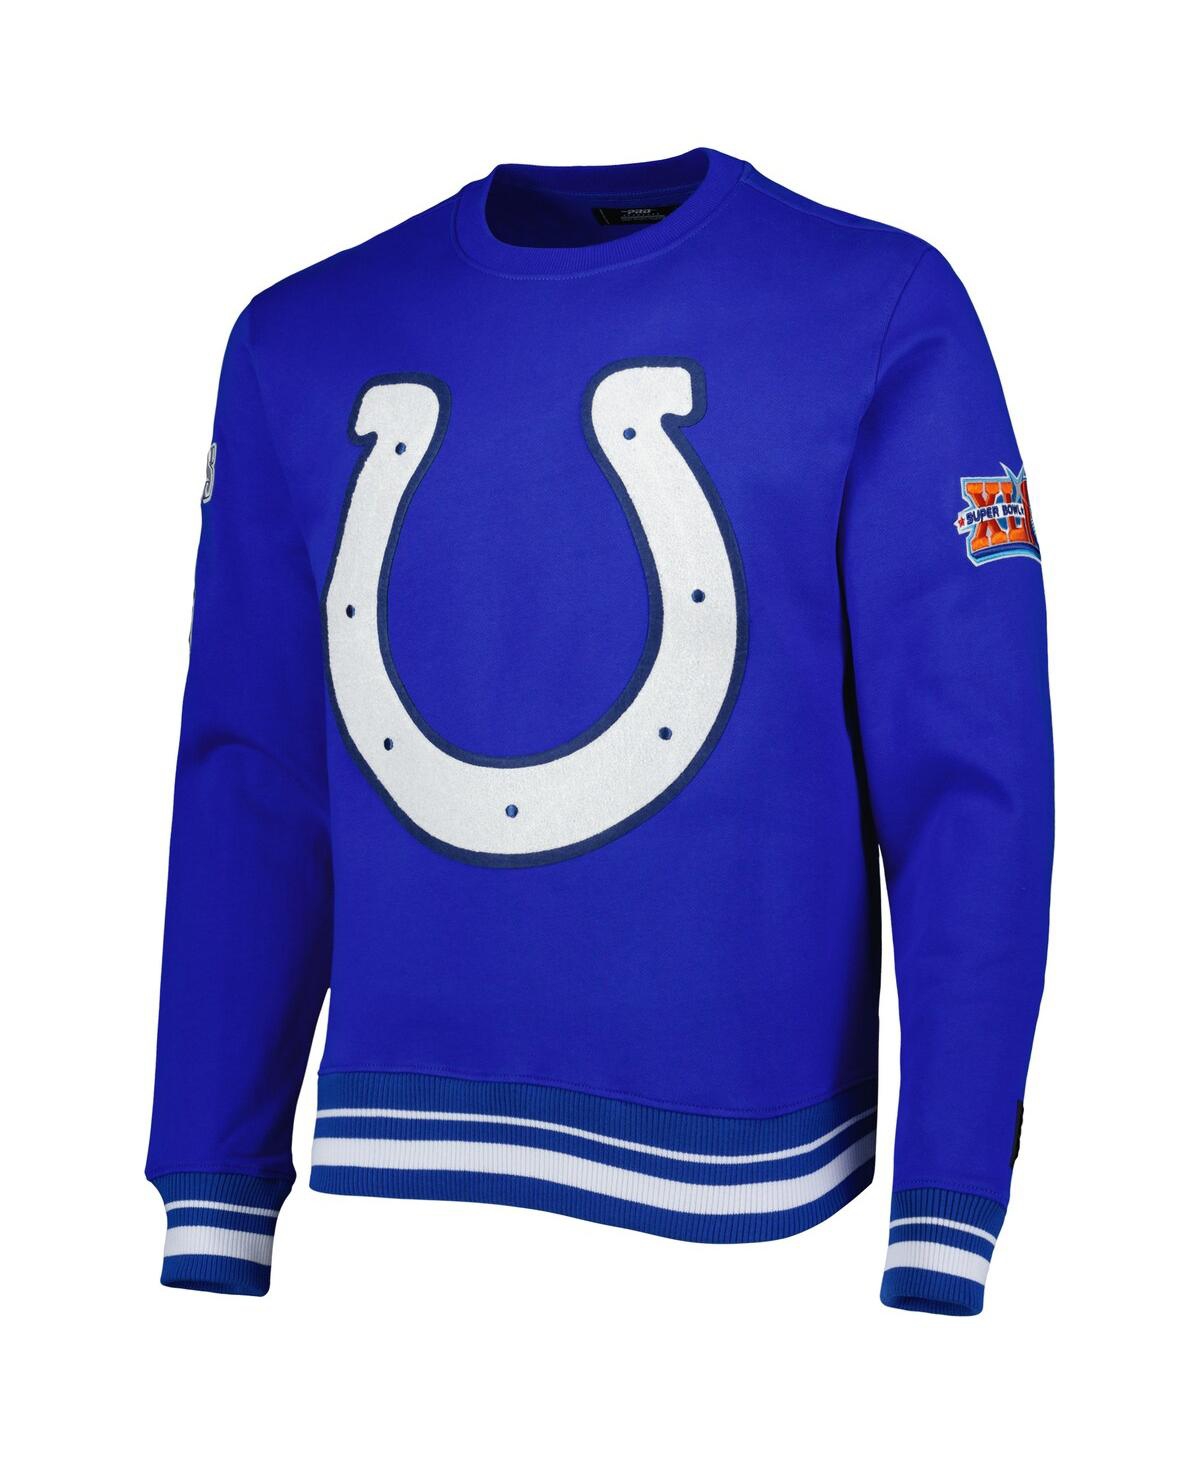 Shop Pro Standard Men's  Royal Indianapolis Colts Mash Up Pullover Sweatshirt